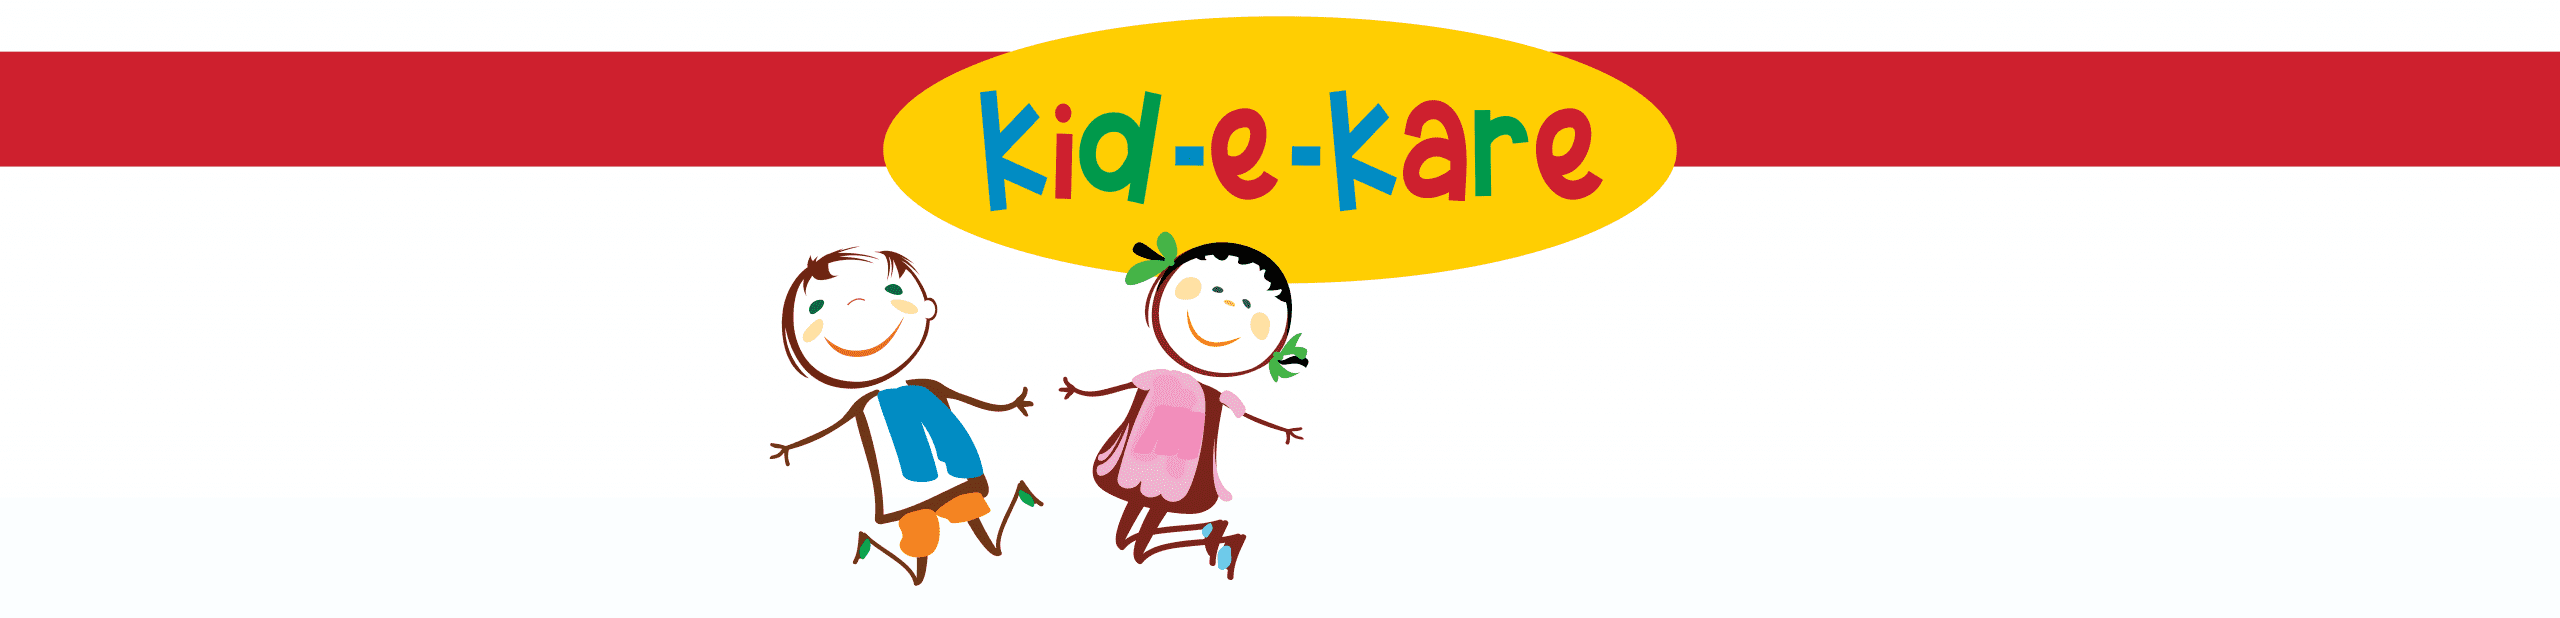 Kid-e-Kare banner iamge